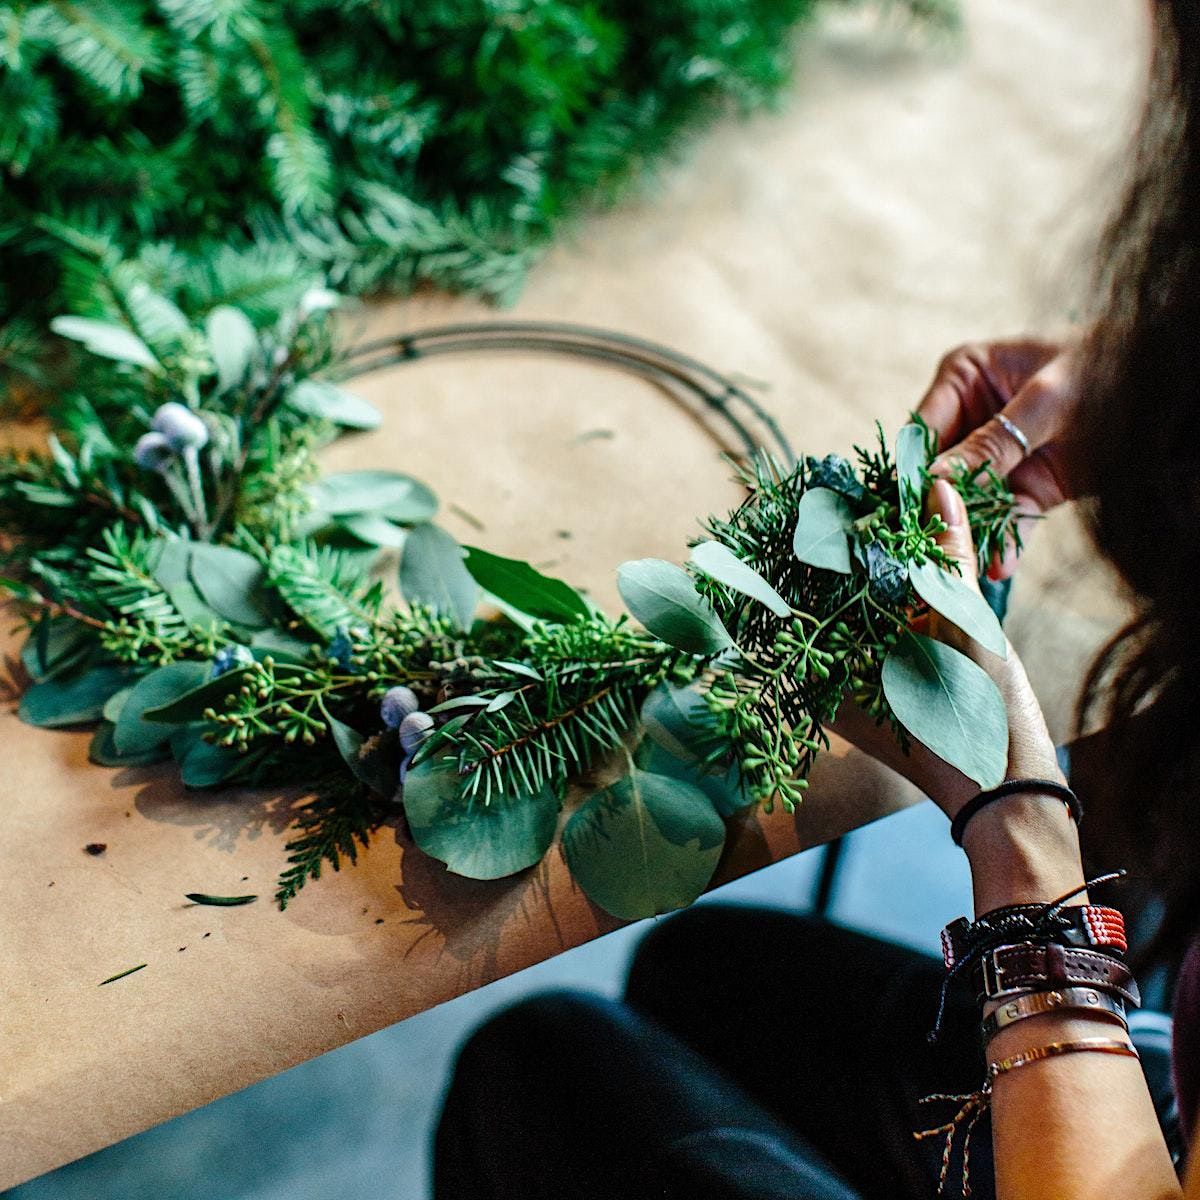 Festive shopping & Christmas wreath making with Goldfinger & ISHKAR